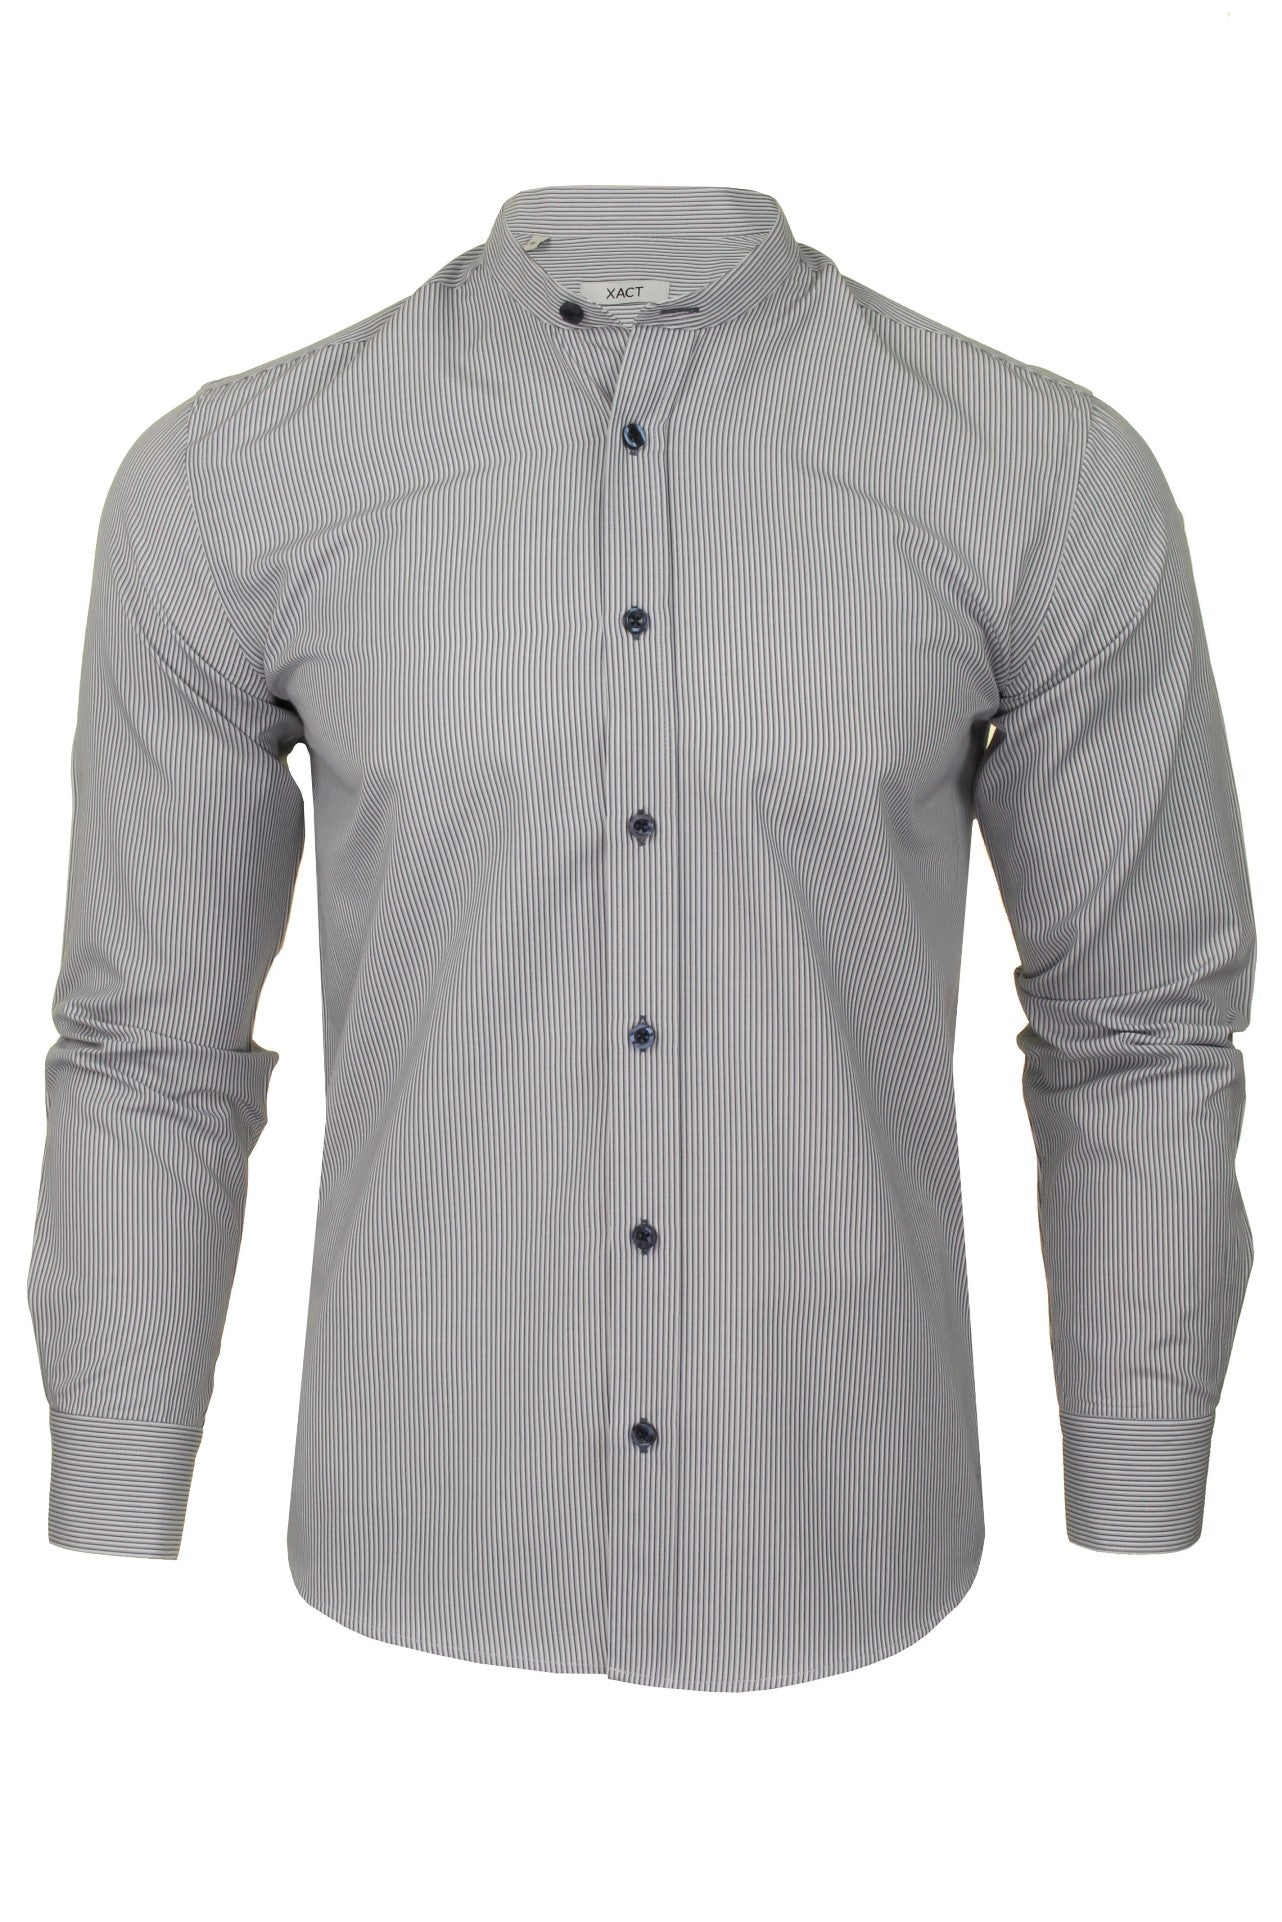 Xact Mens Stripe Grandad Shirt - Long Sleeved-Main Image